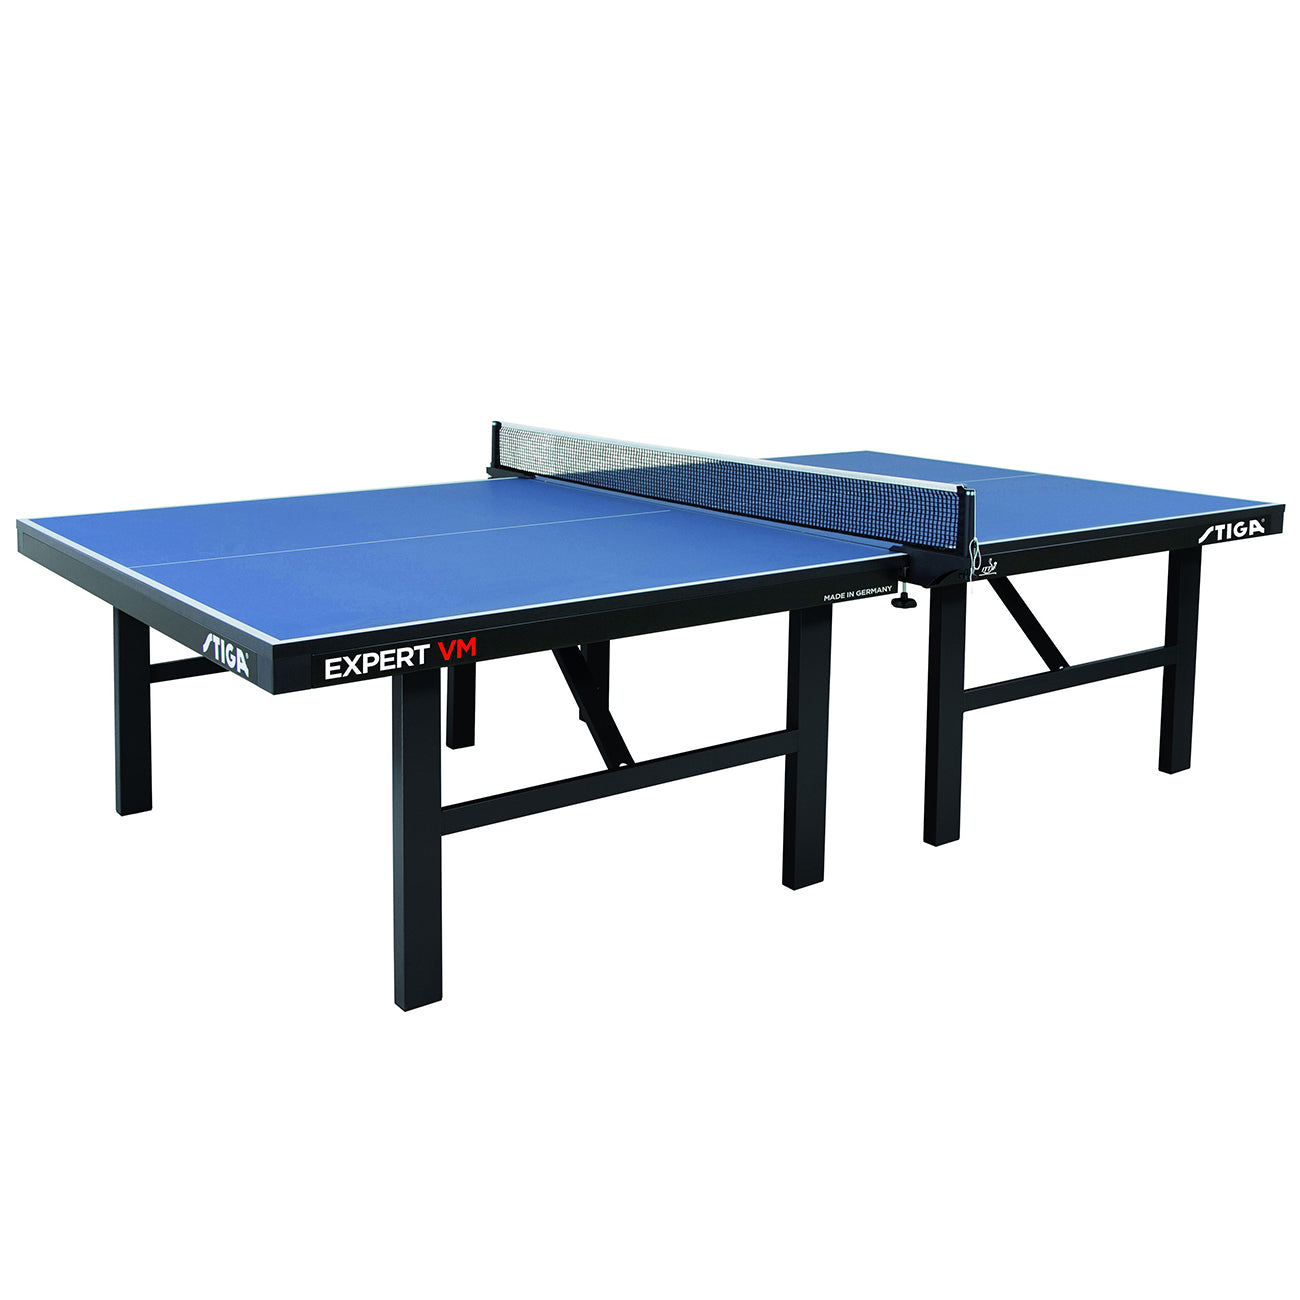 Stiga Expert VM Indoor Table Tennis Table